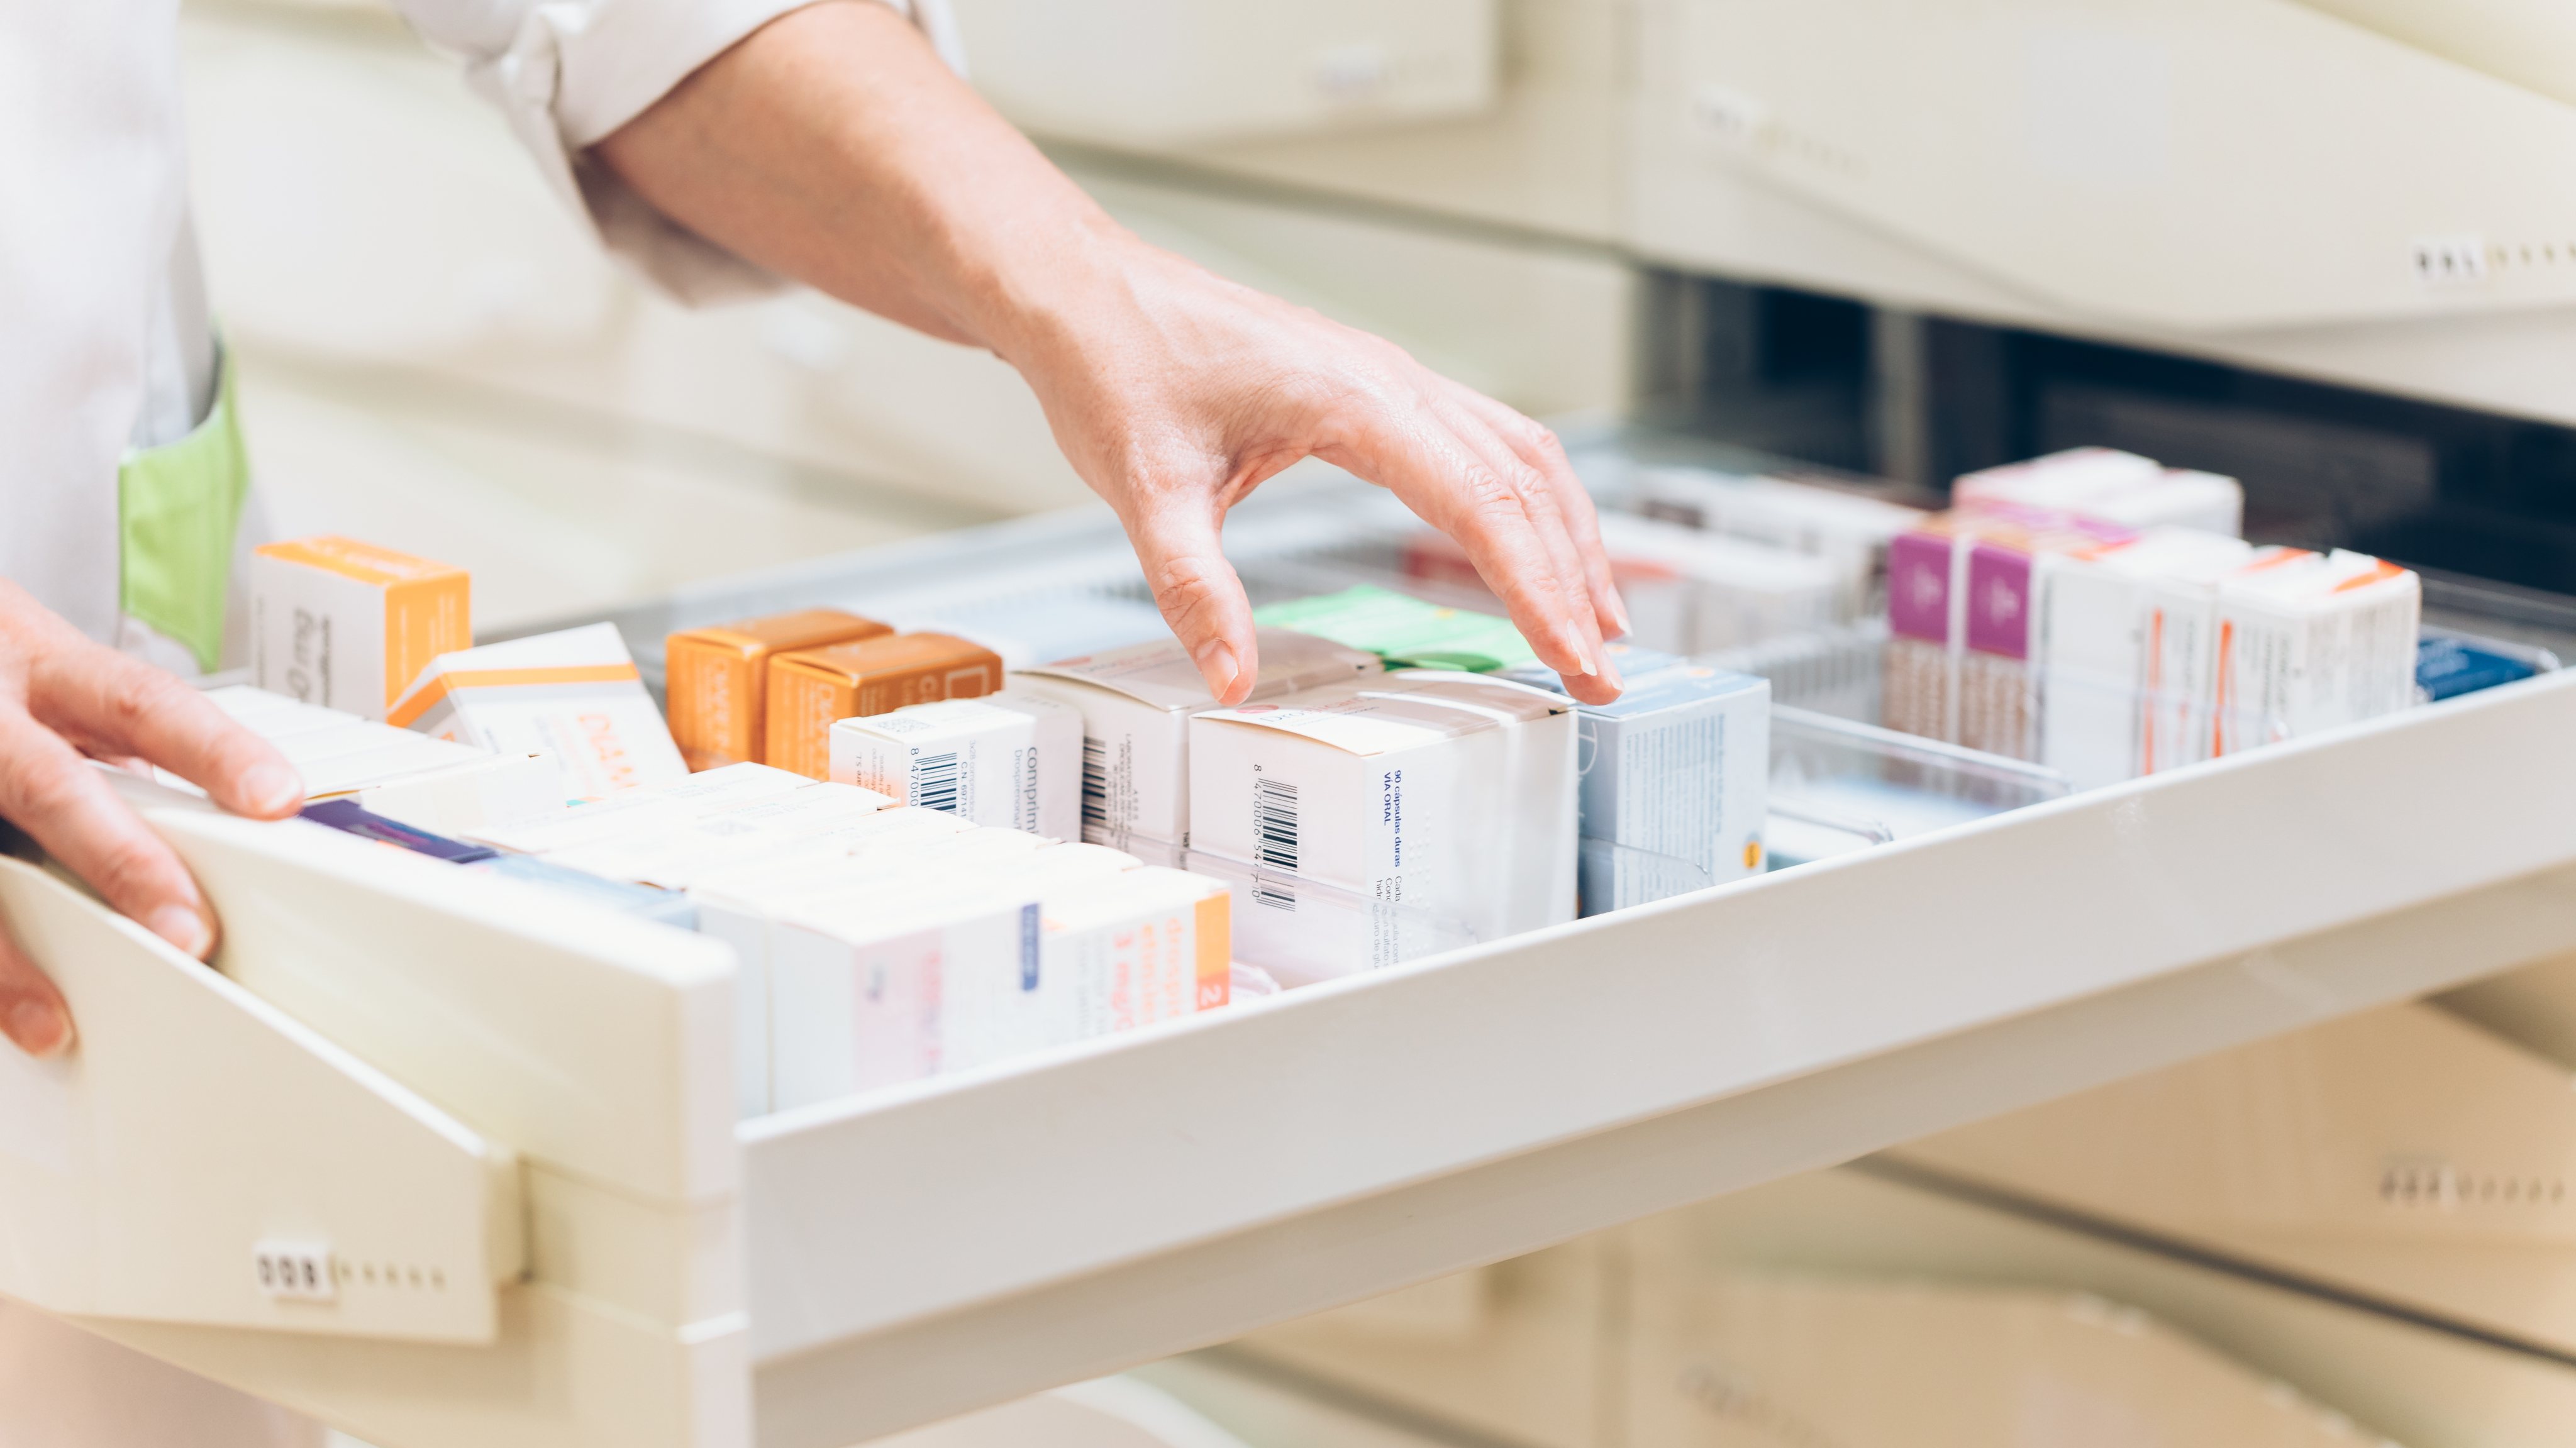 Pharmacist hand taking medication from drawer